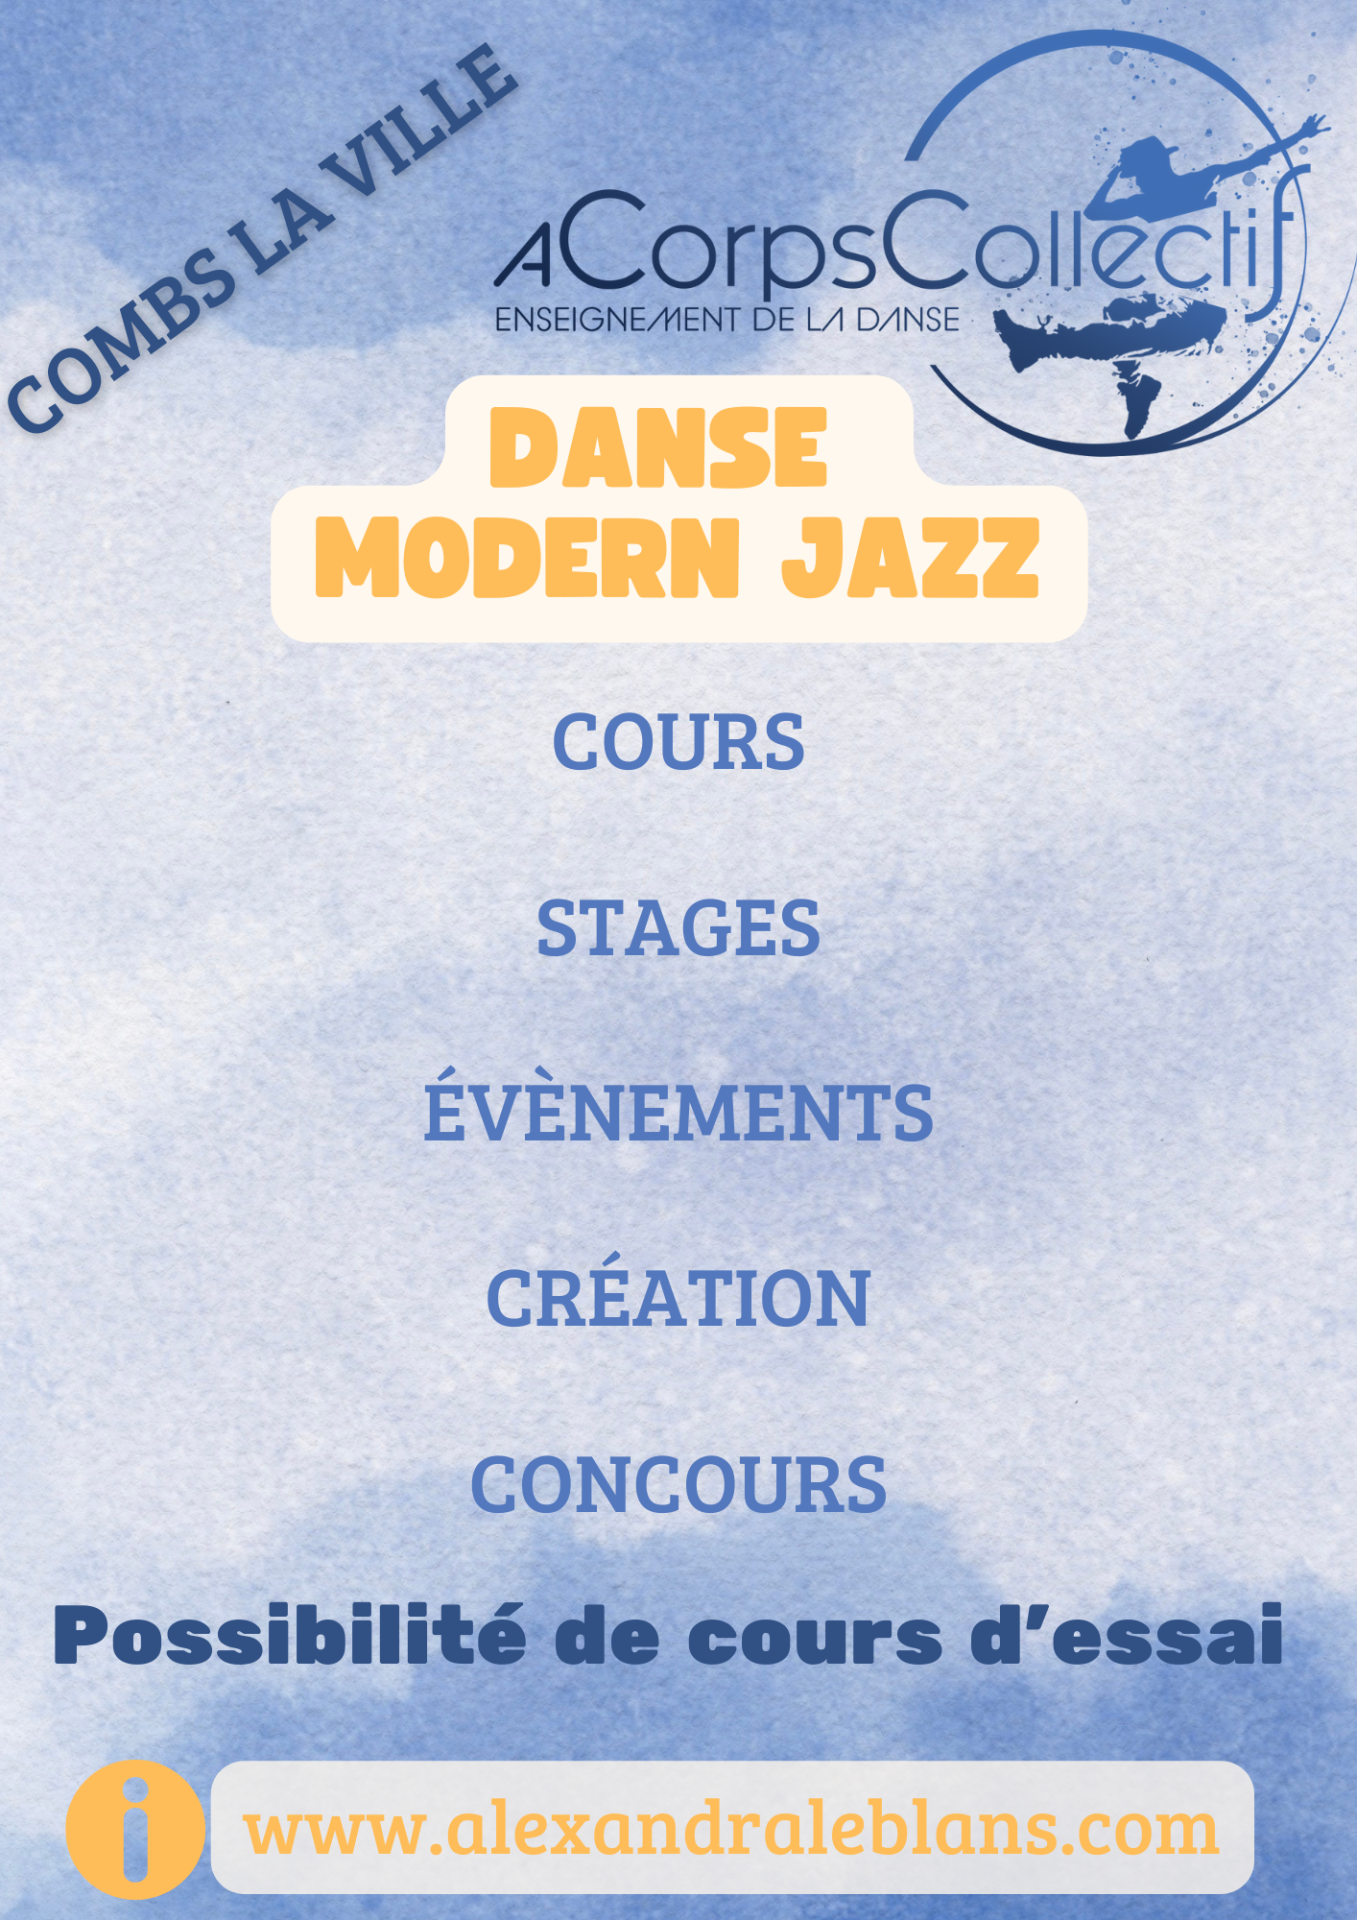 Cours de modern jazz acc